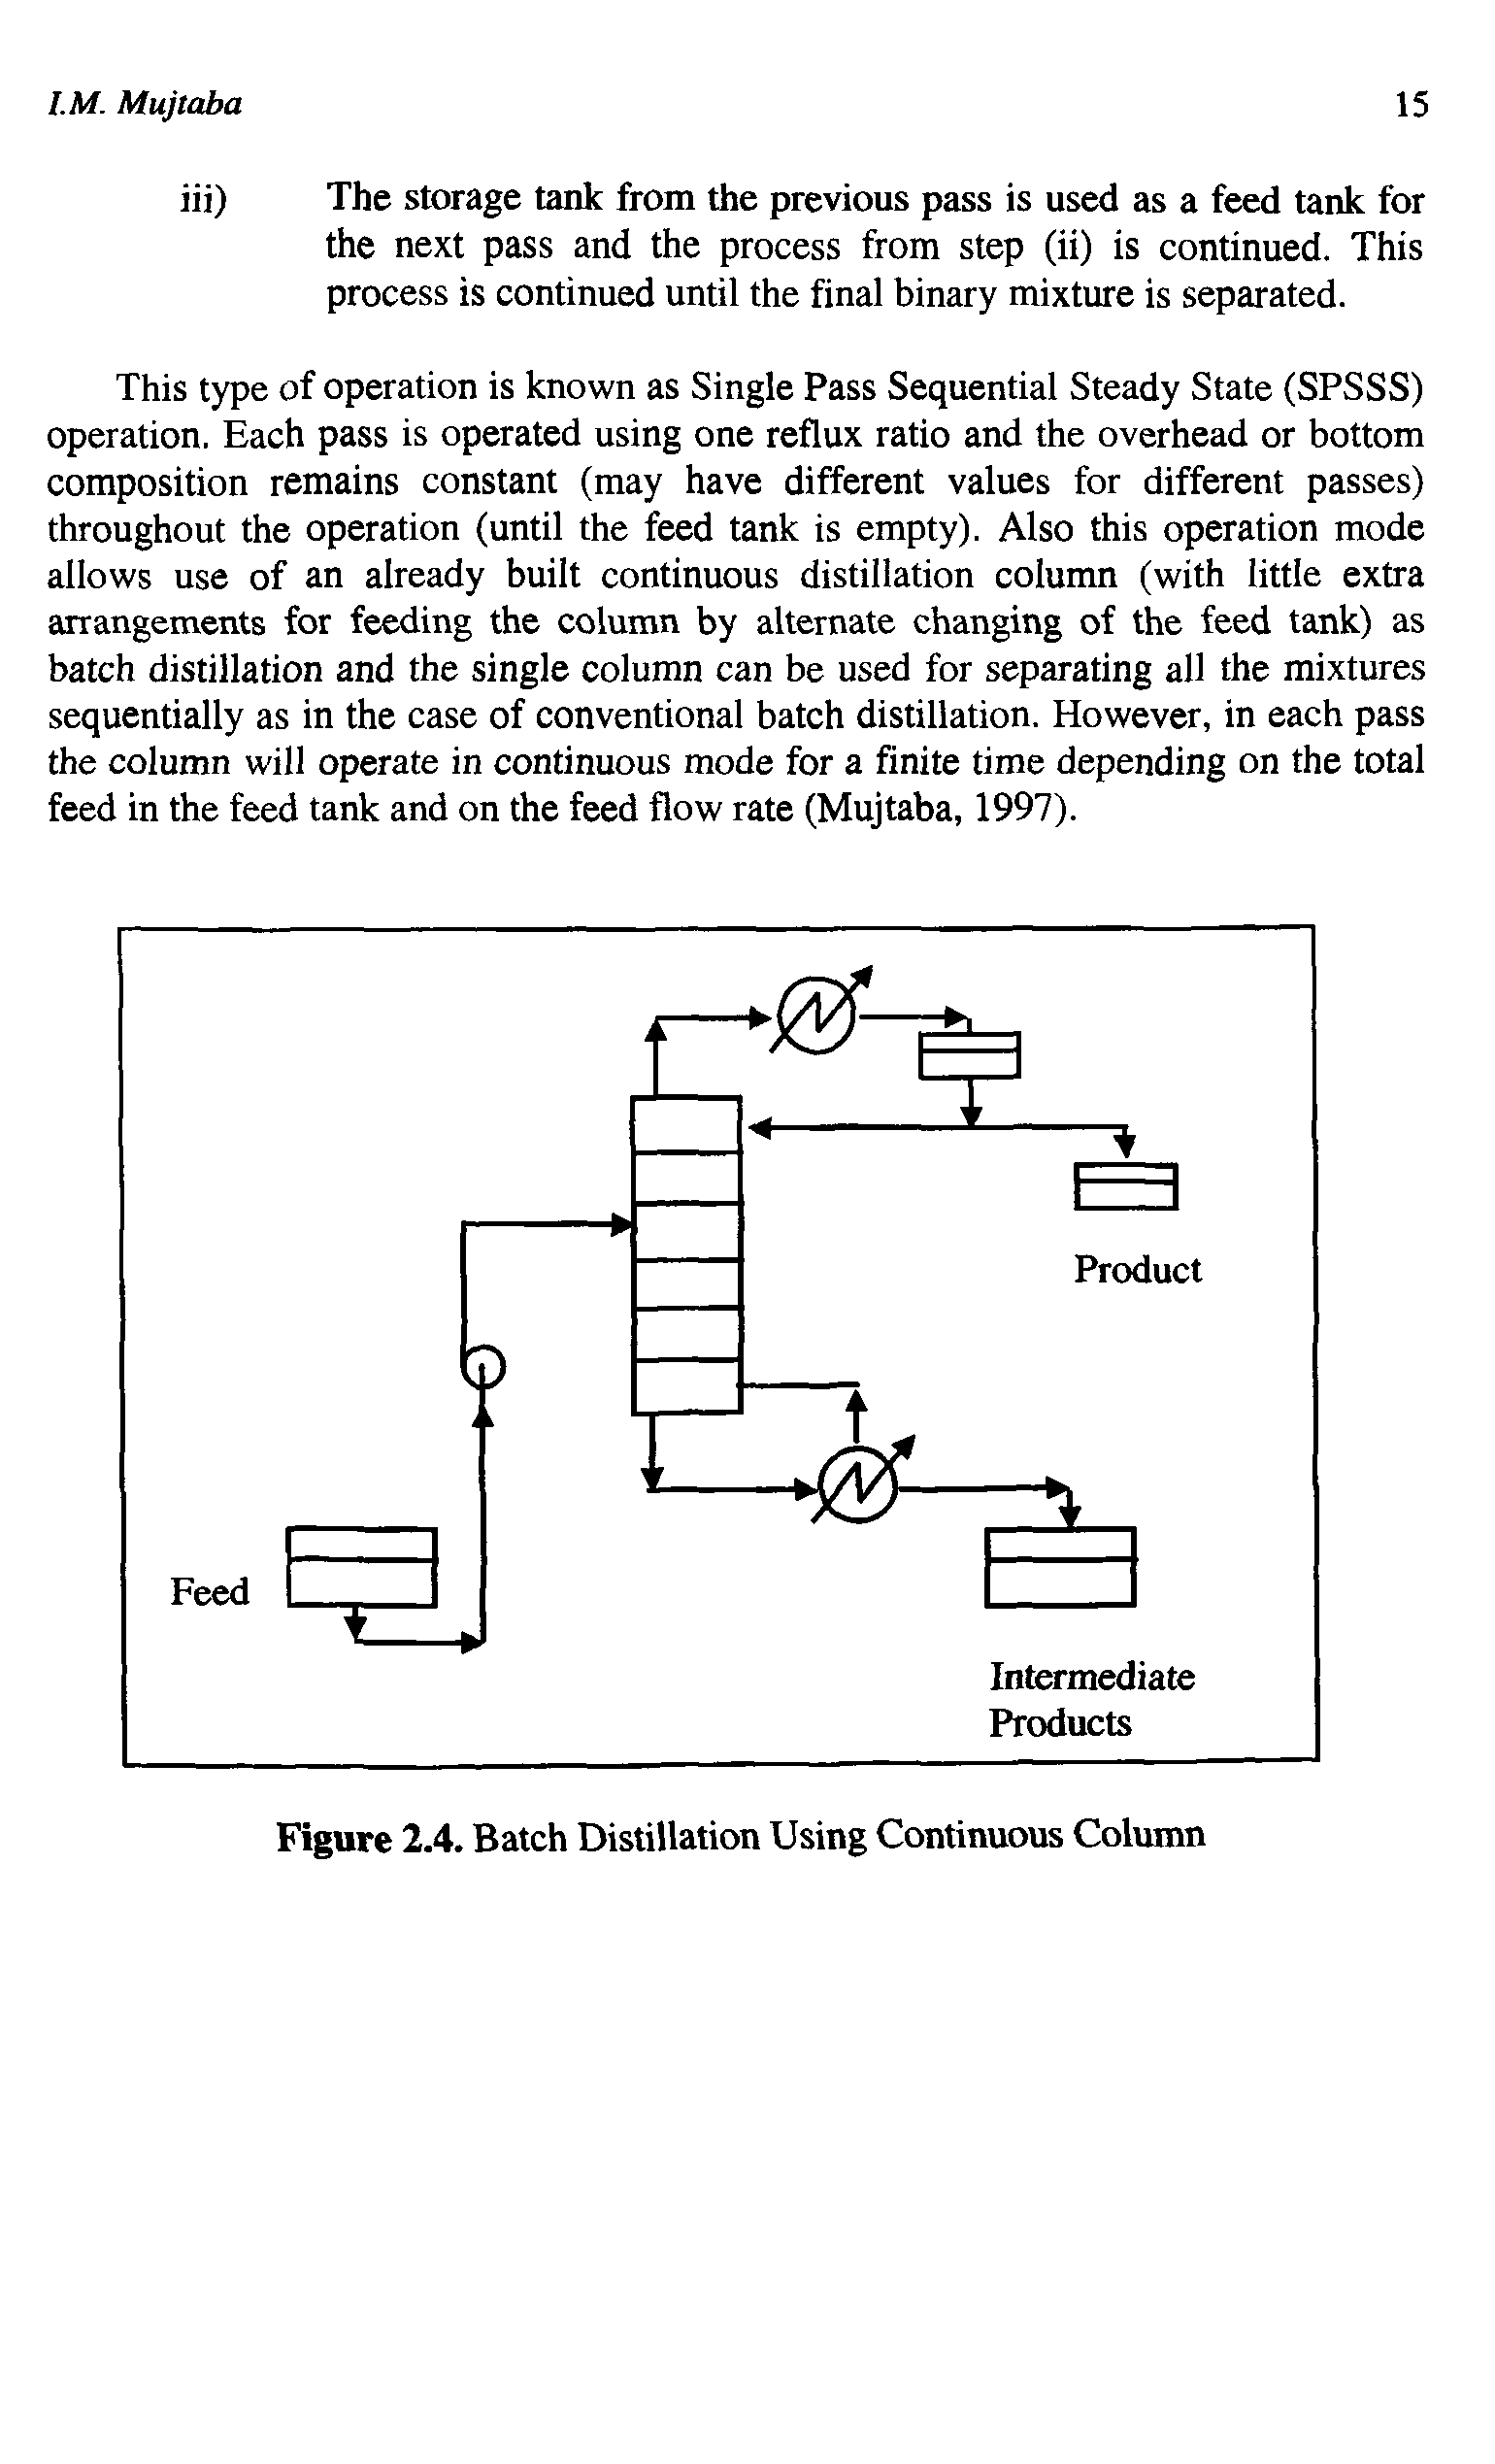 Figure 2.4. Batch Distillation Using Continuous Column...